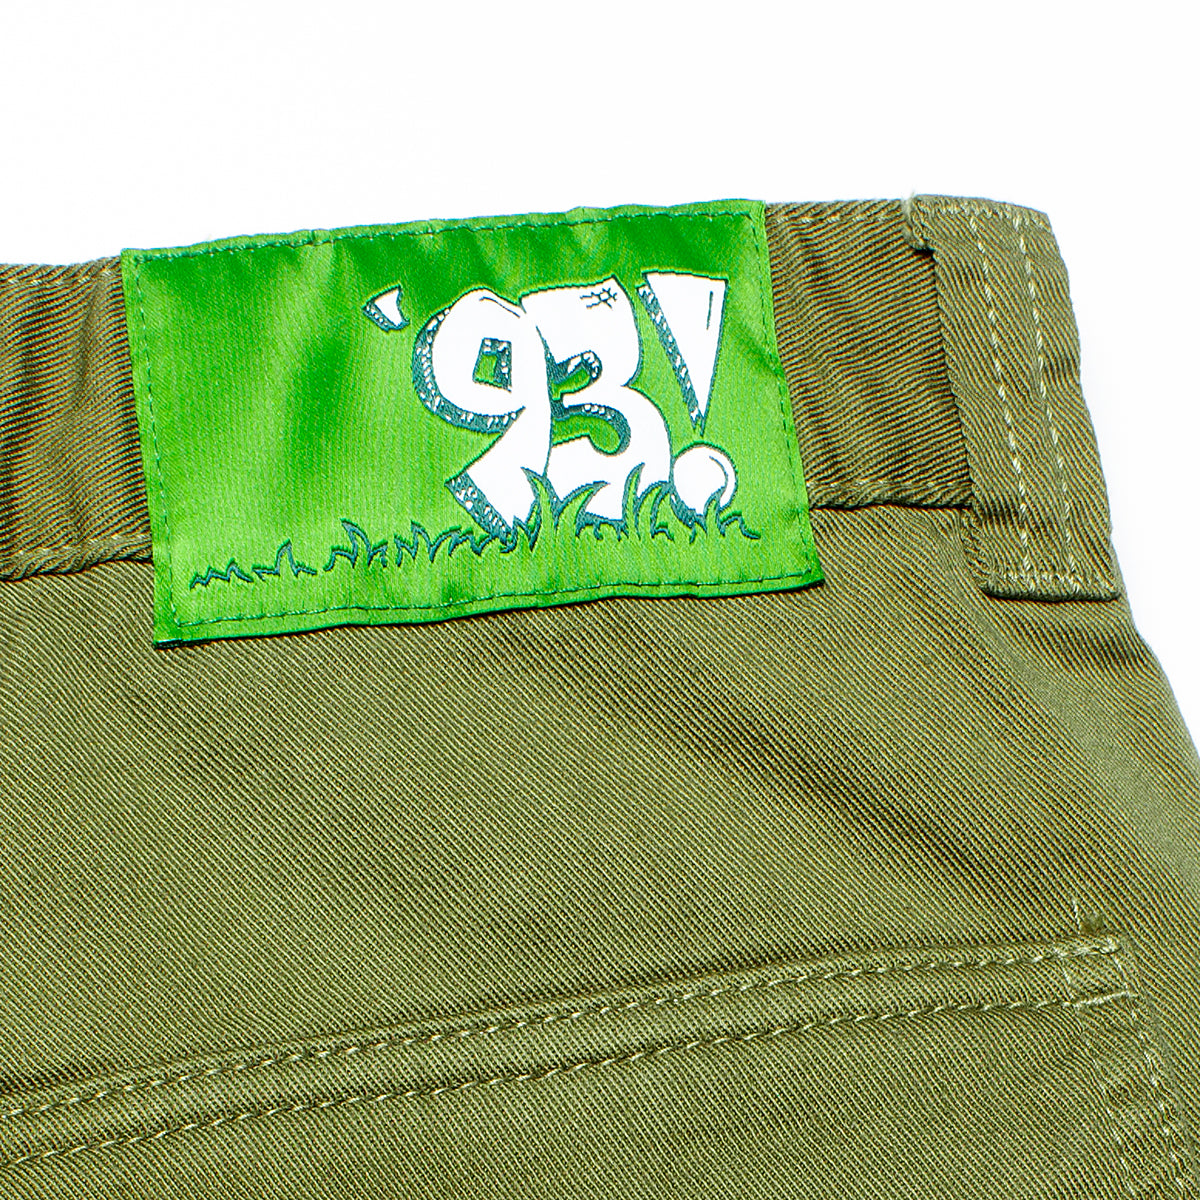 Polar '93 Cargo Pants